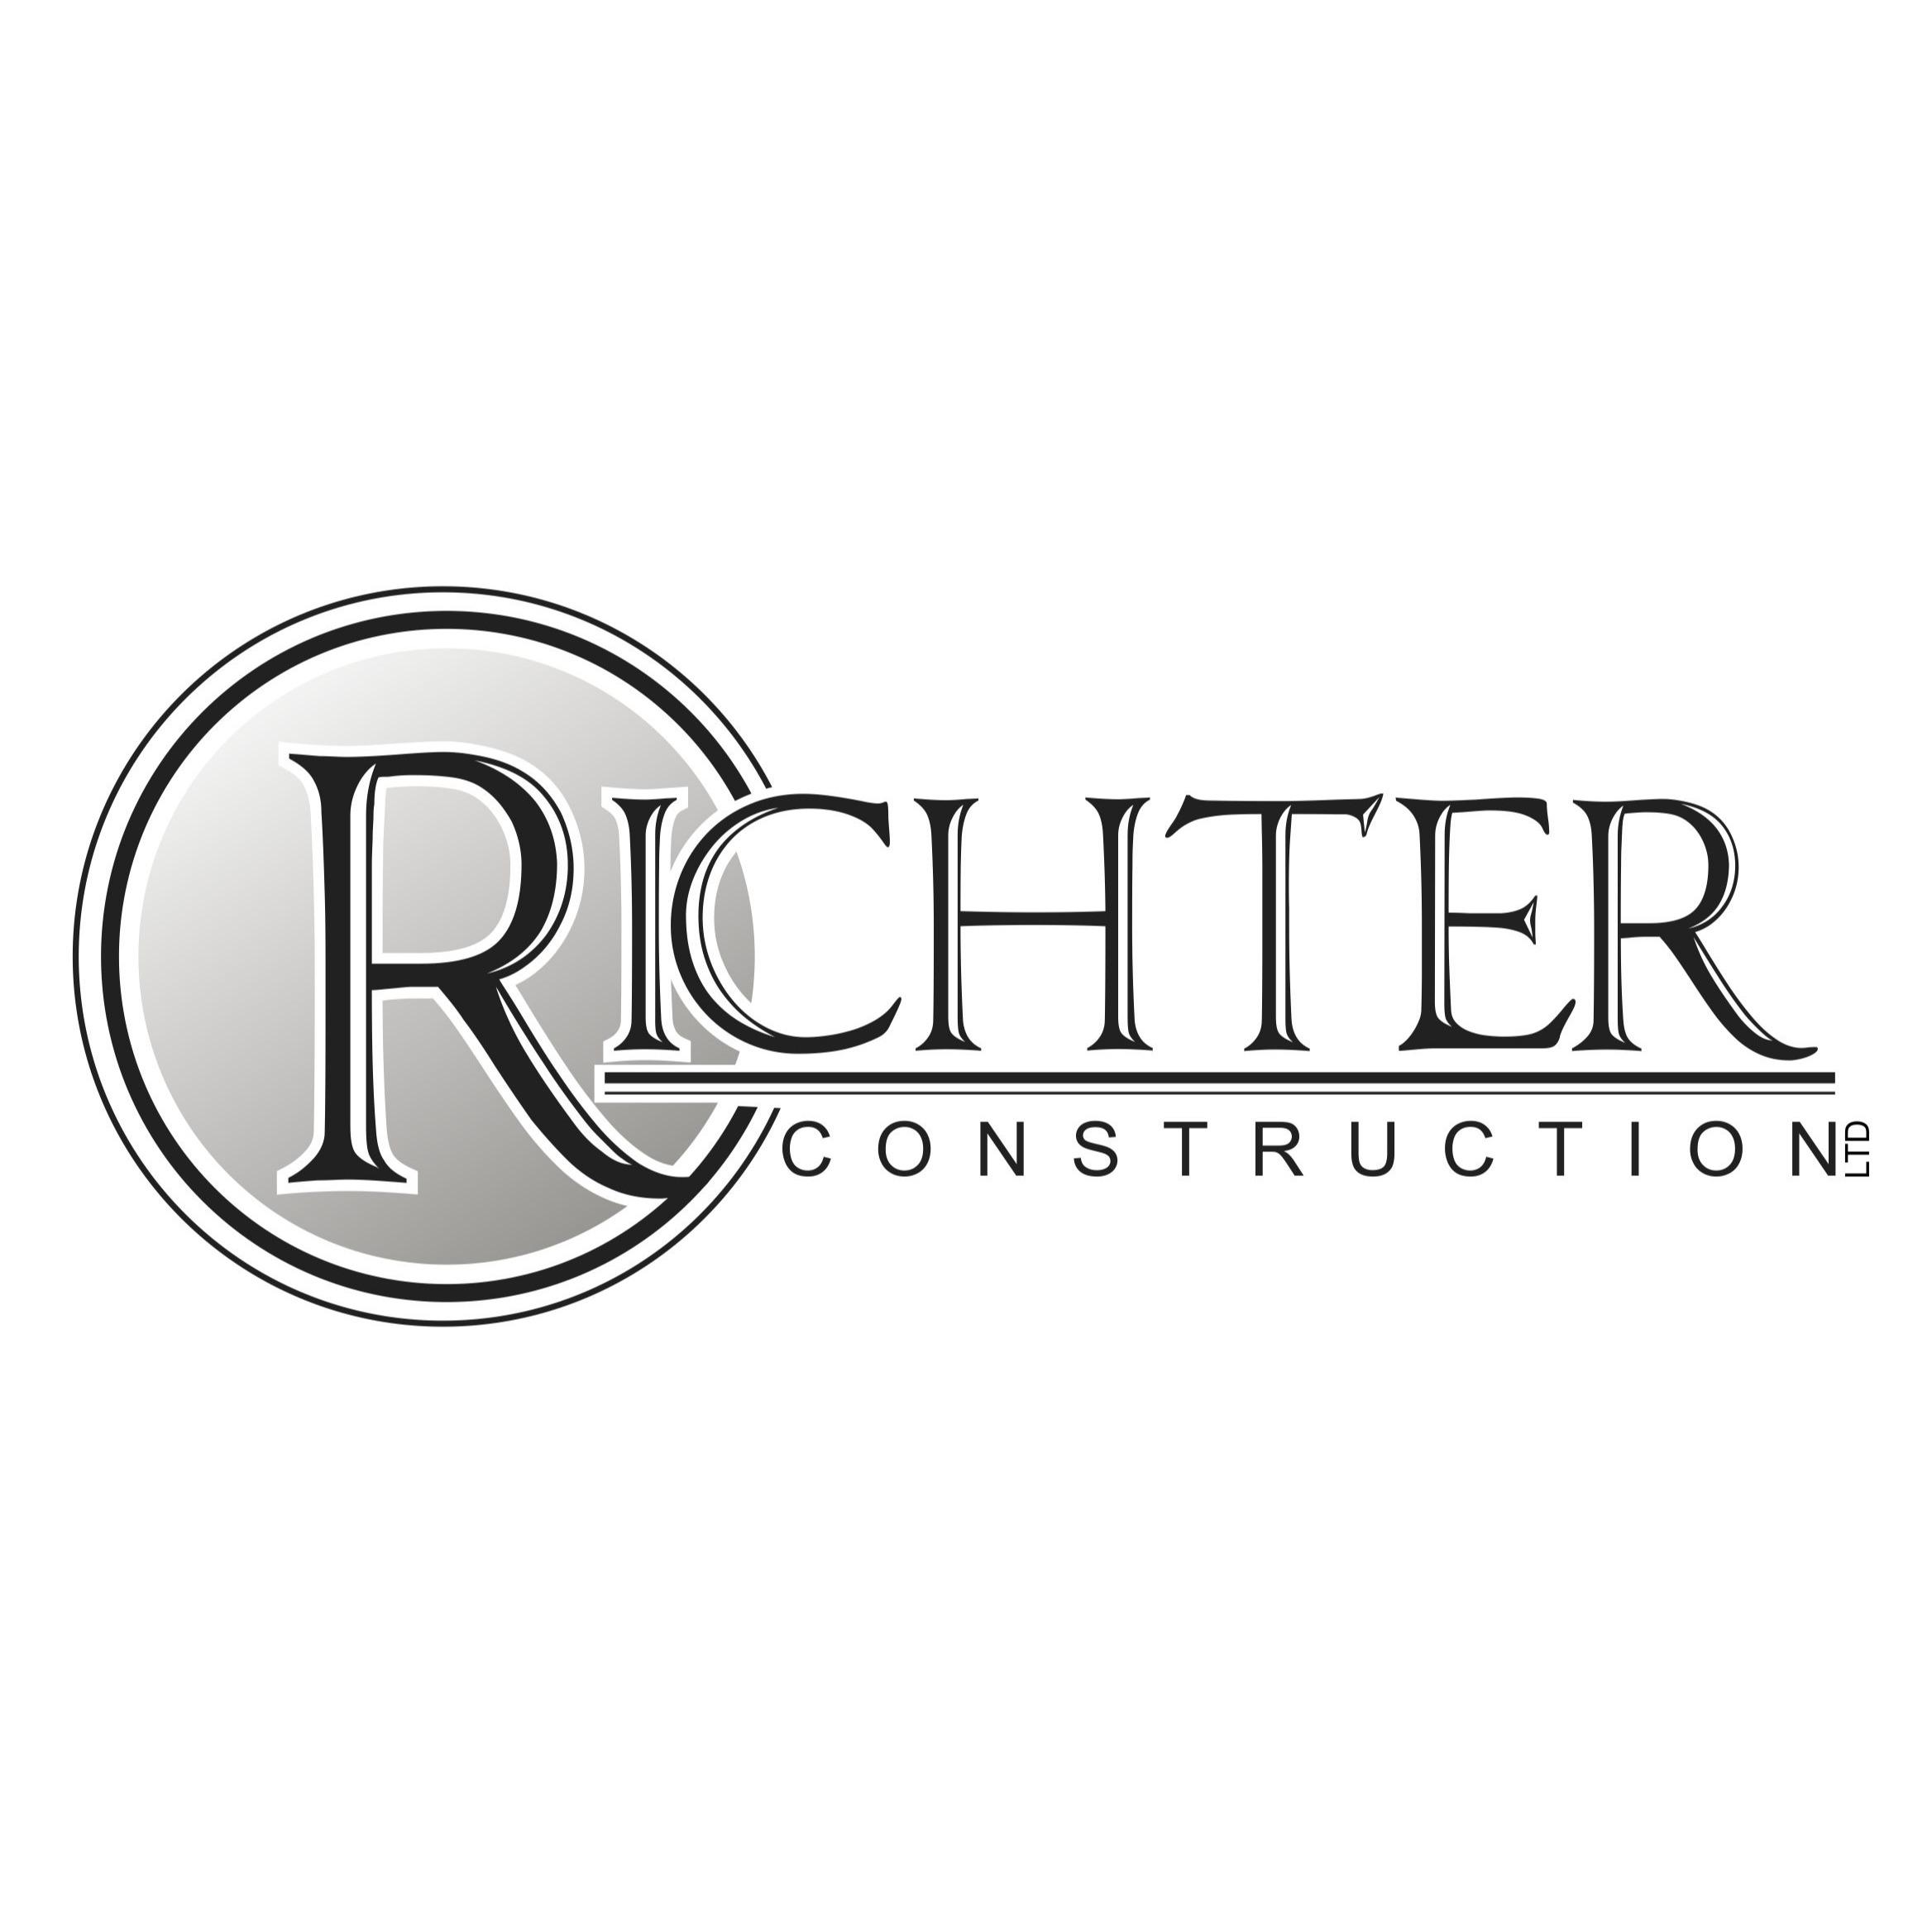 Richter Construction, Ltd.